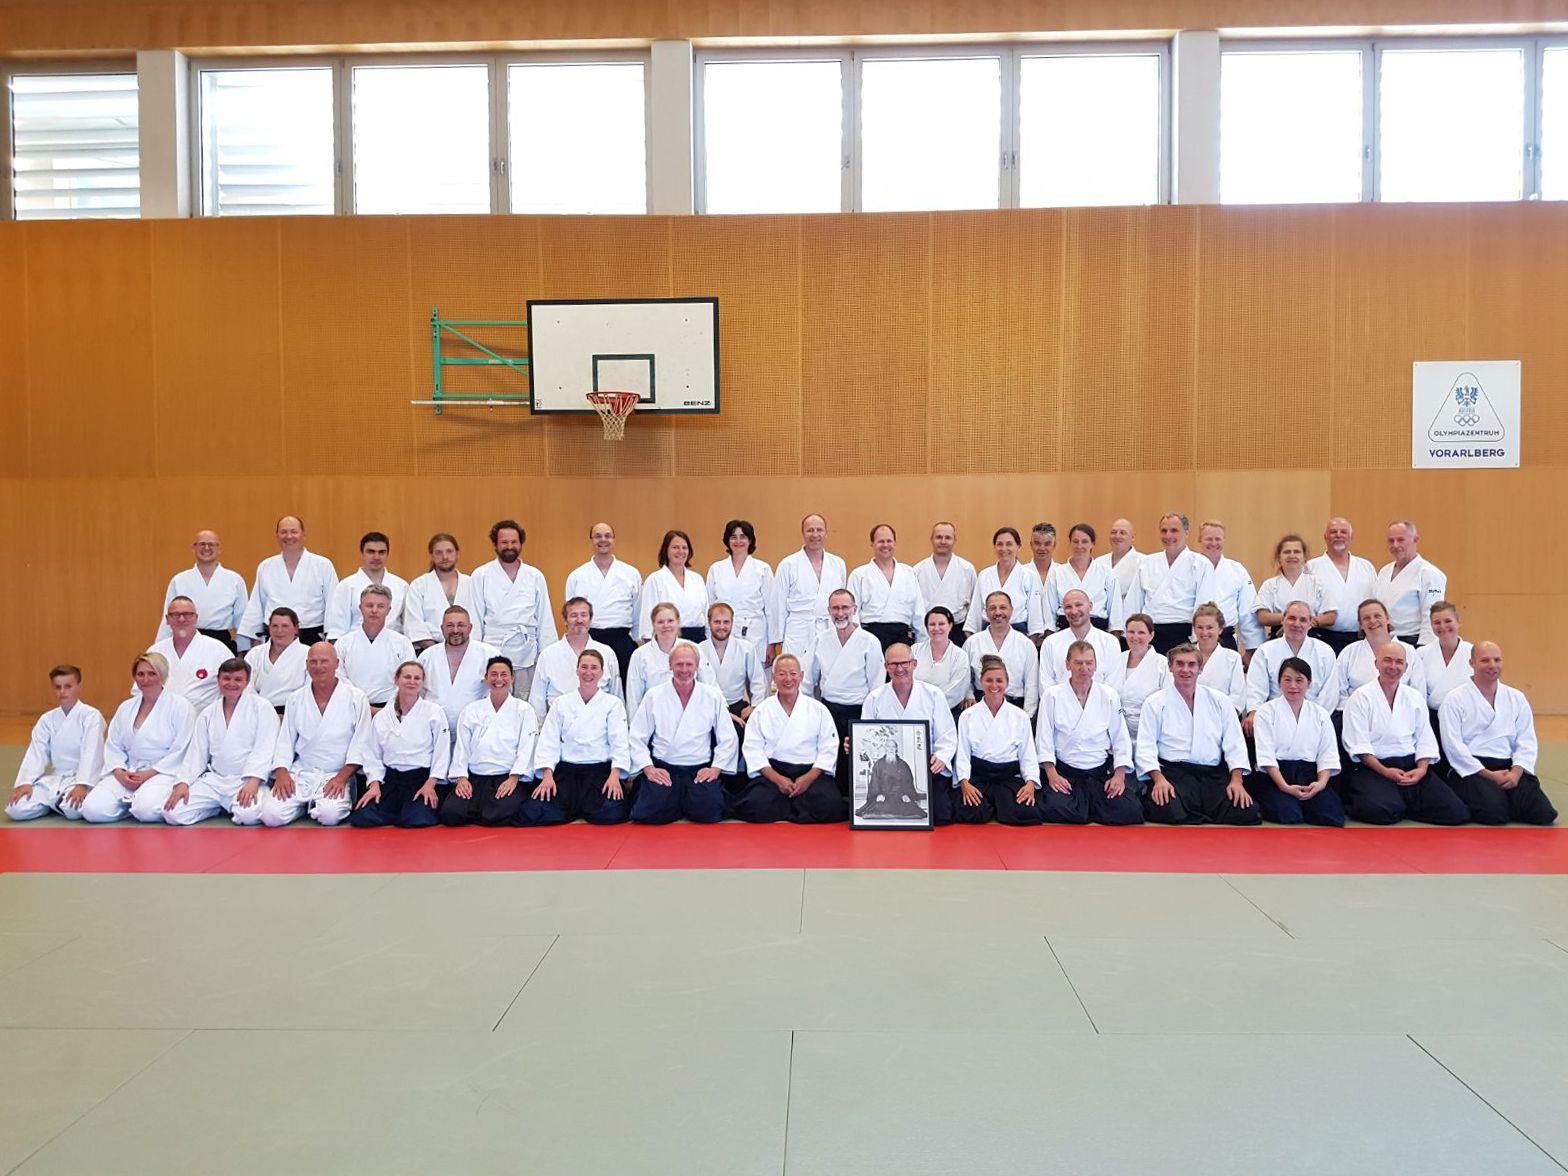 Gruppenbild mit den Teilnehmern des 24. International Aikido-Seminar mit Endo Seishiro Shihan, 8. Dan